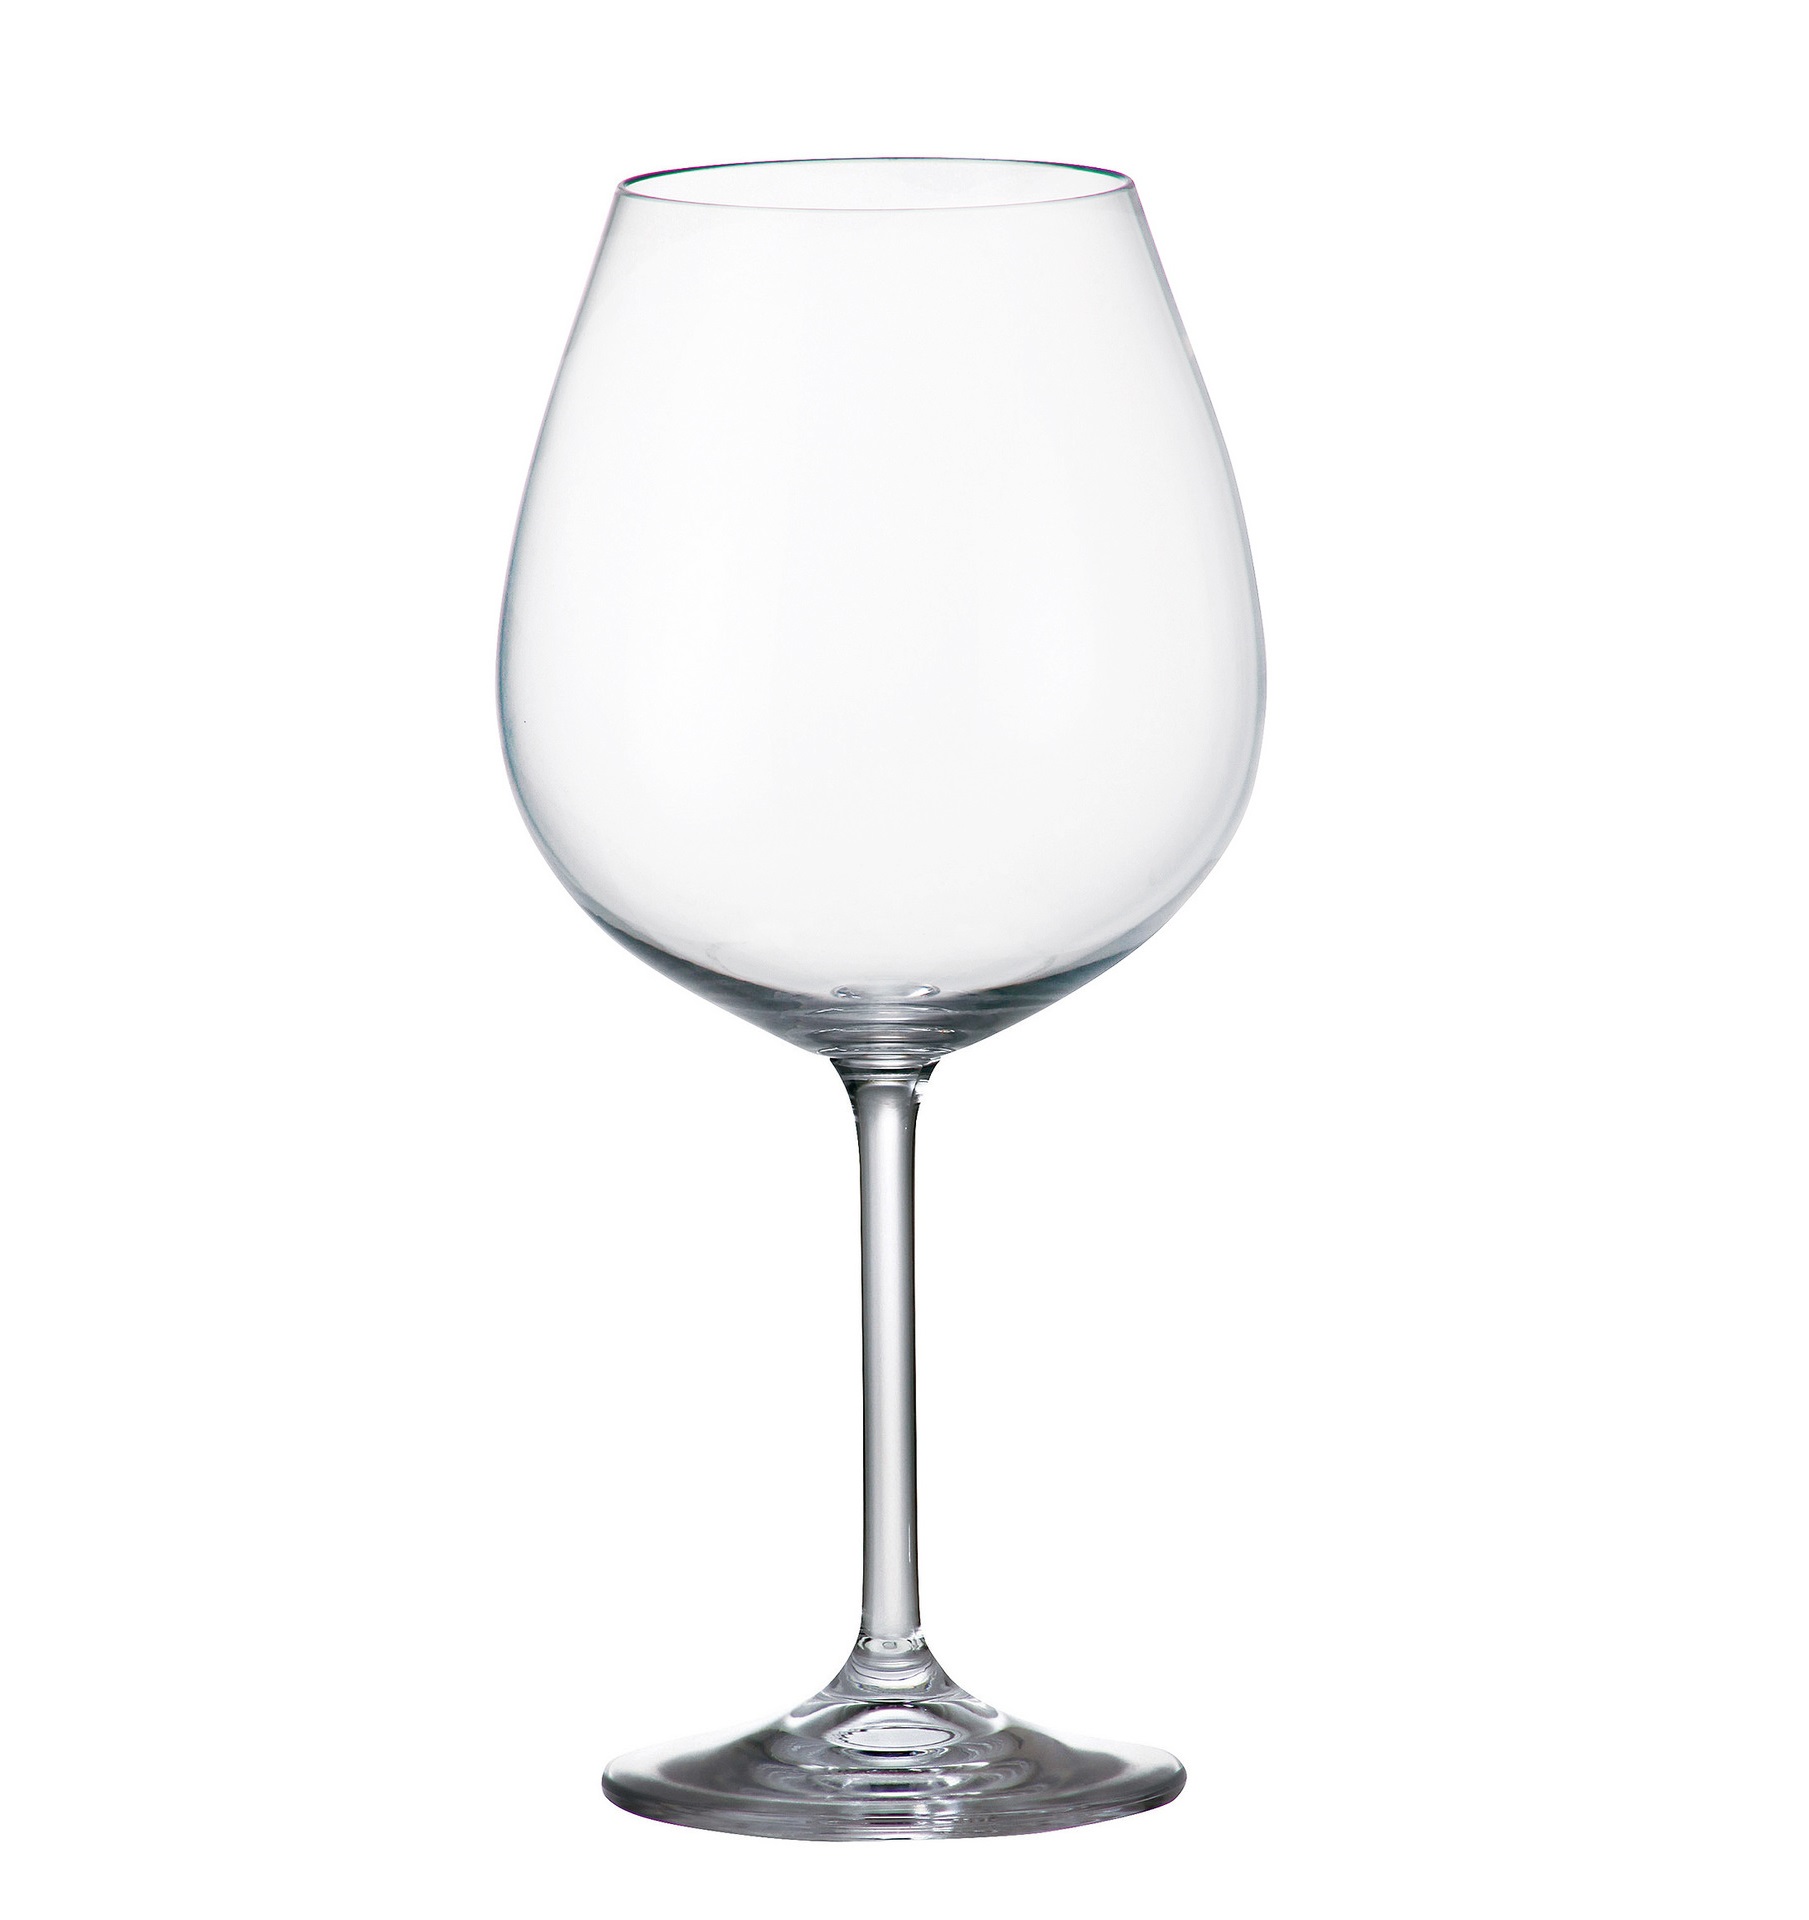 Бокал для вина литр. Riedel бокал для вина Sommeliers Burgundy Grand Cru 4400/16 1050 мл. Rona 2 serve. Gastro Crystalite Bohemia 650 мл. Бокалы Rona select 51.